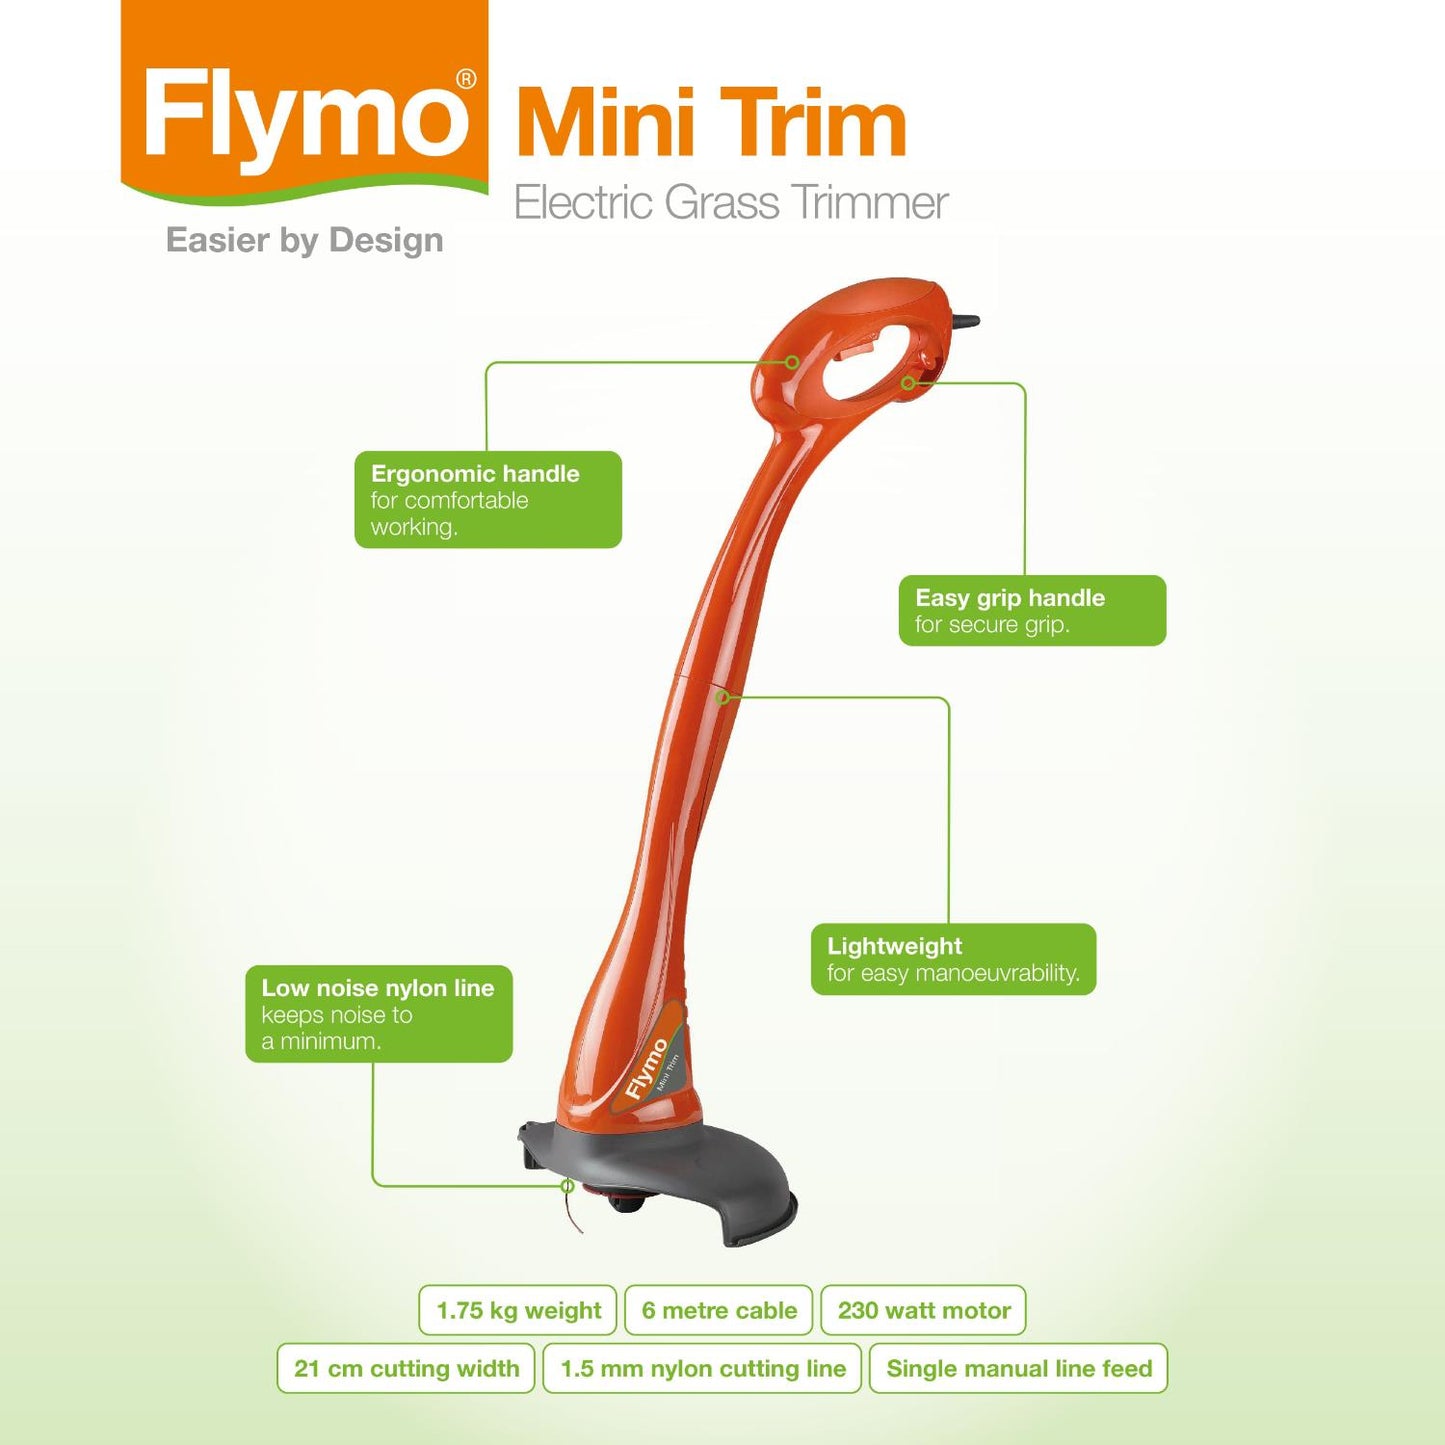 Flymo 230w Mini Trim Electric Grass Trimmer